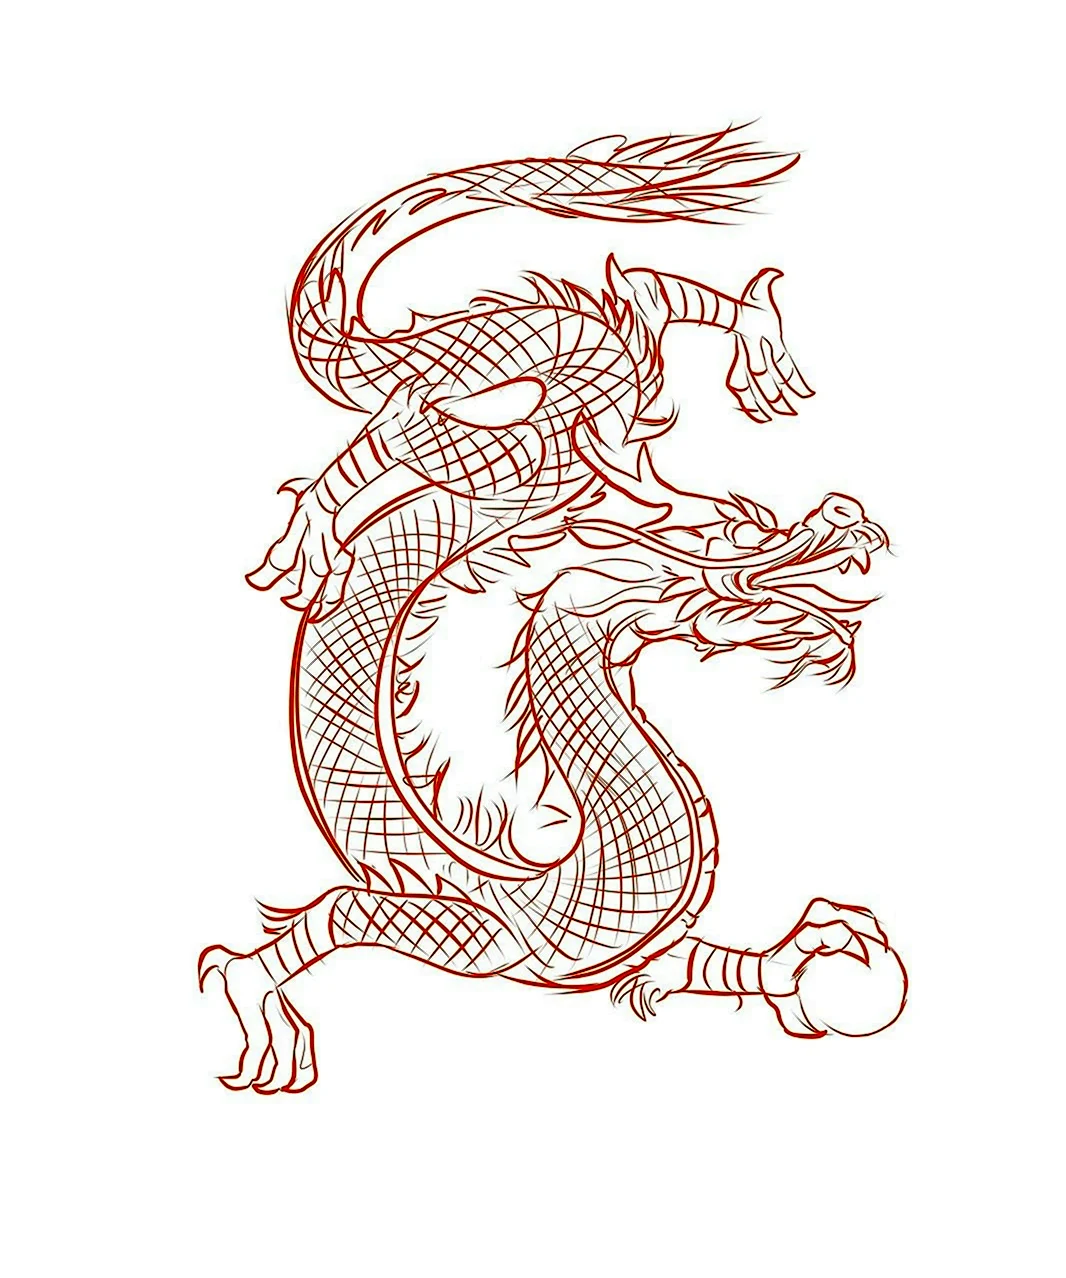 Китайский дракон для срисовки. Для срисовки